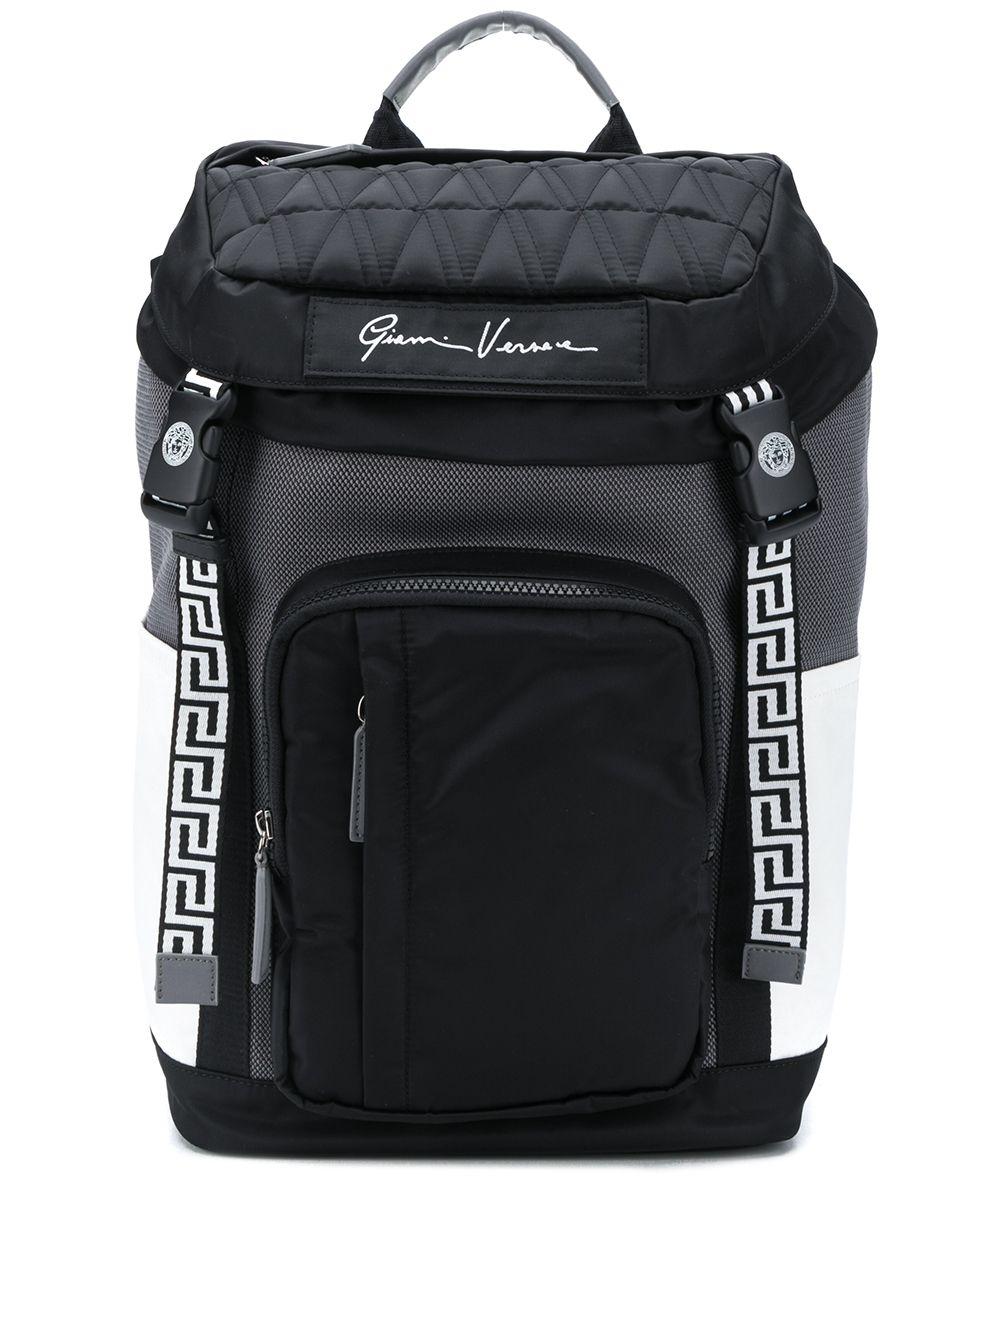 Versace Synthetic Greca Detail Backpack in Black for Men - Lyst